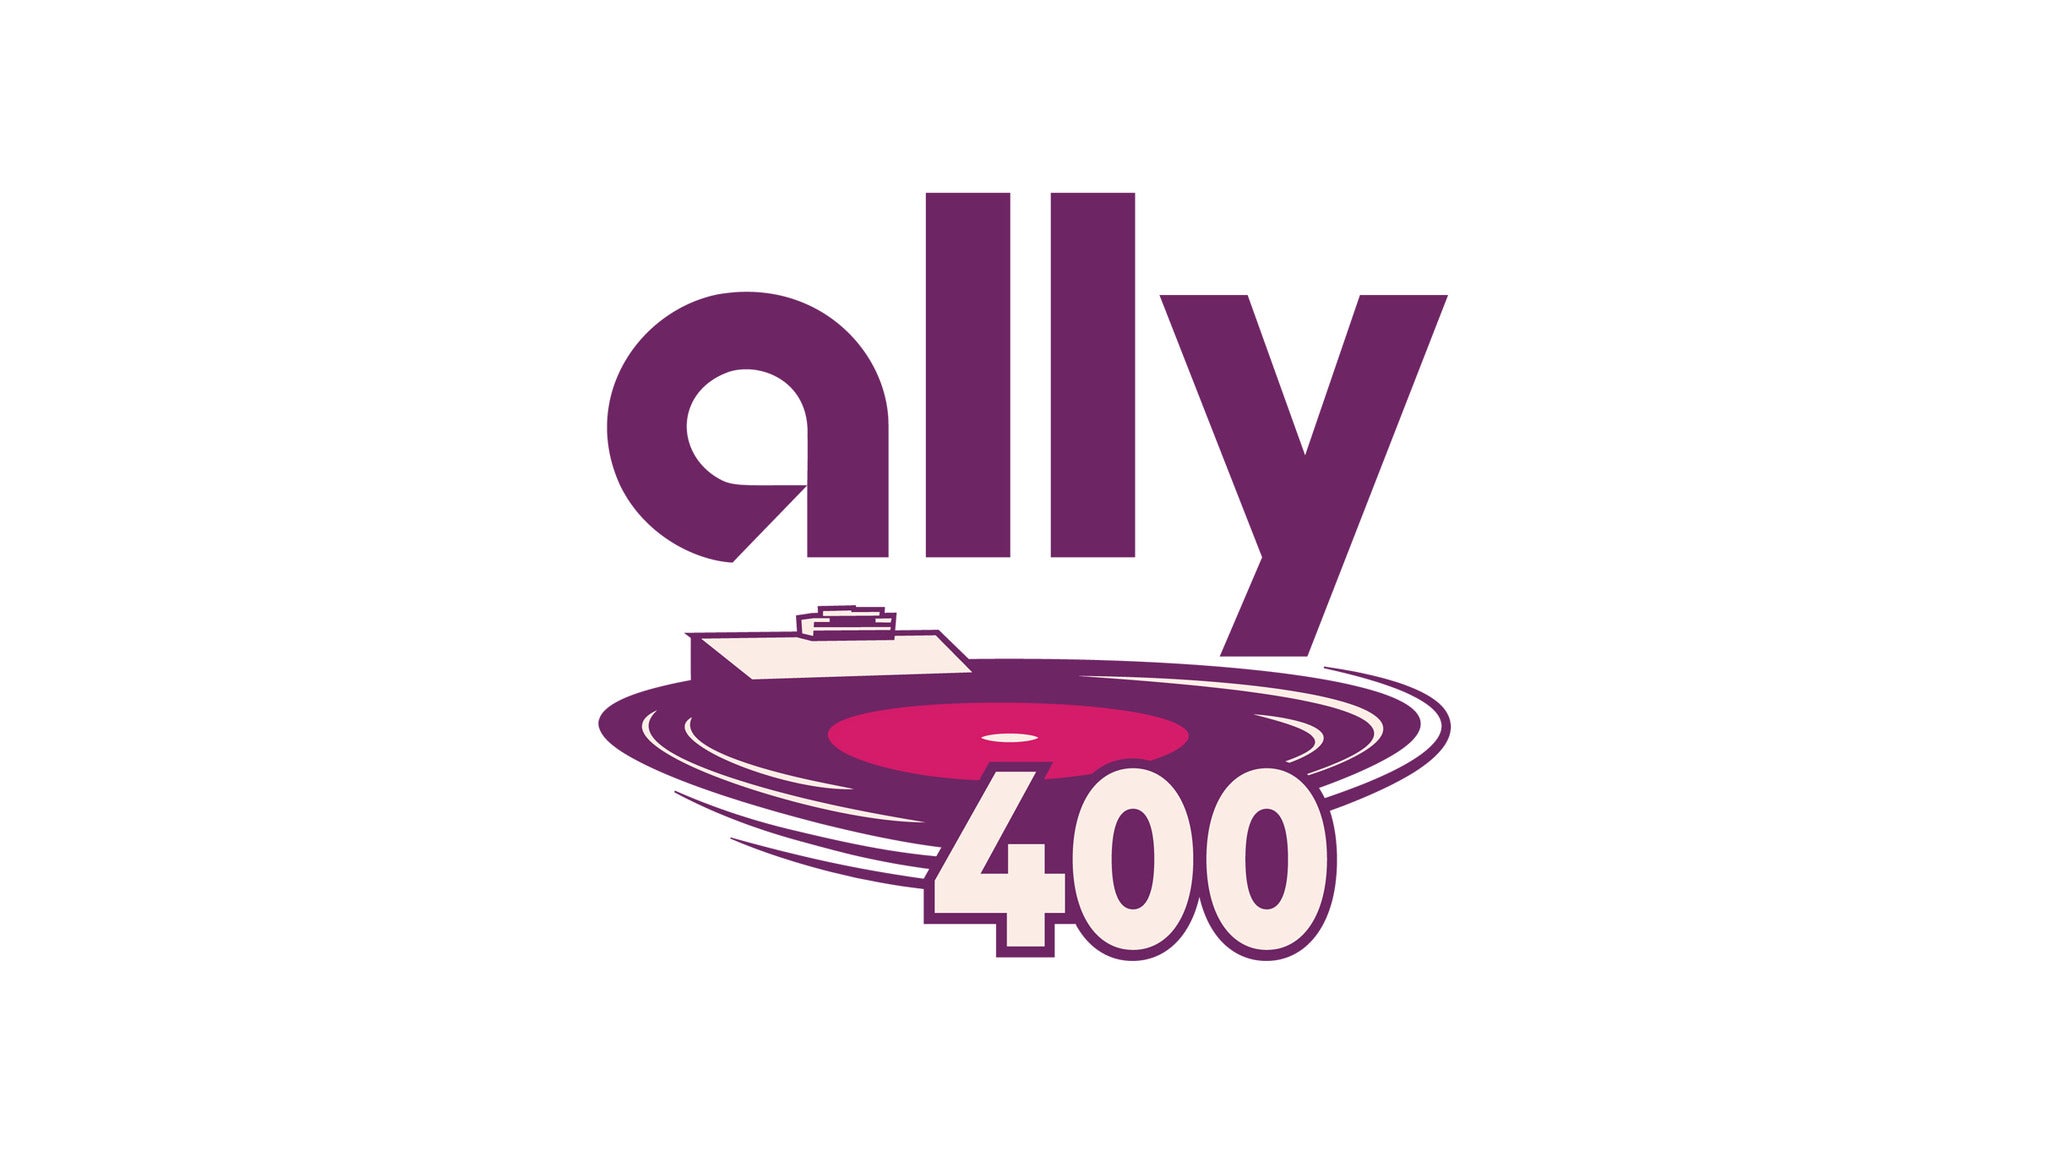 Ally 400 presale information on freepresalepasswords.com